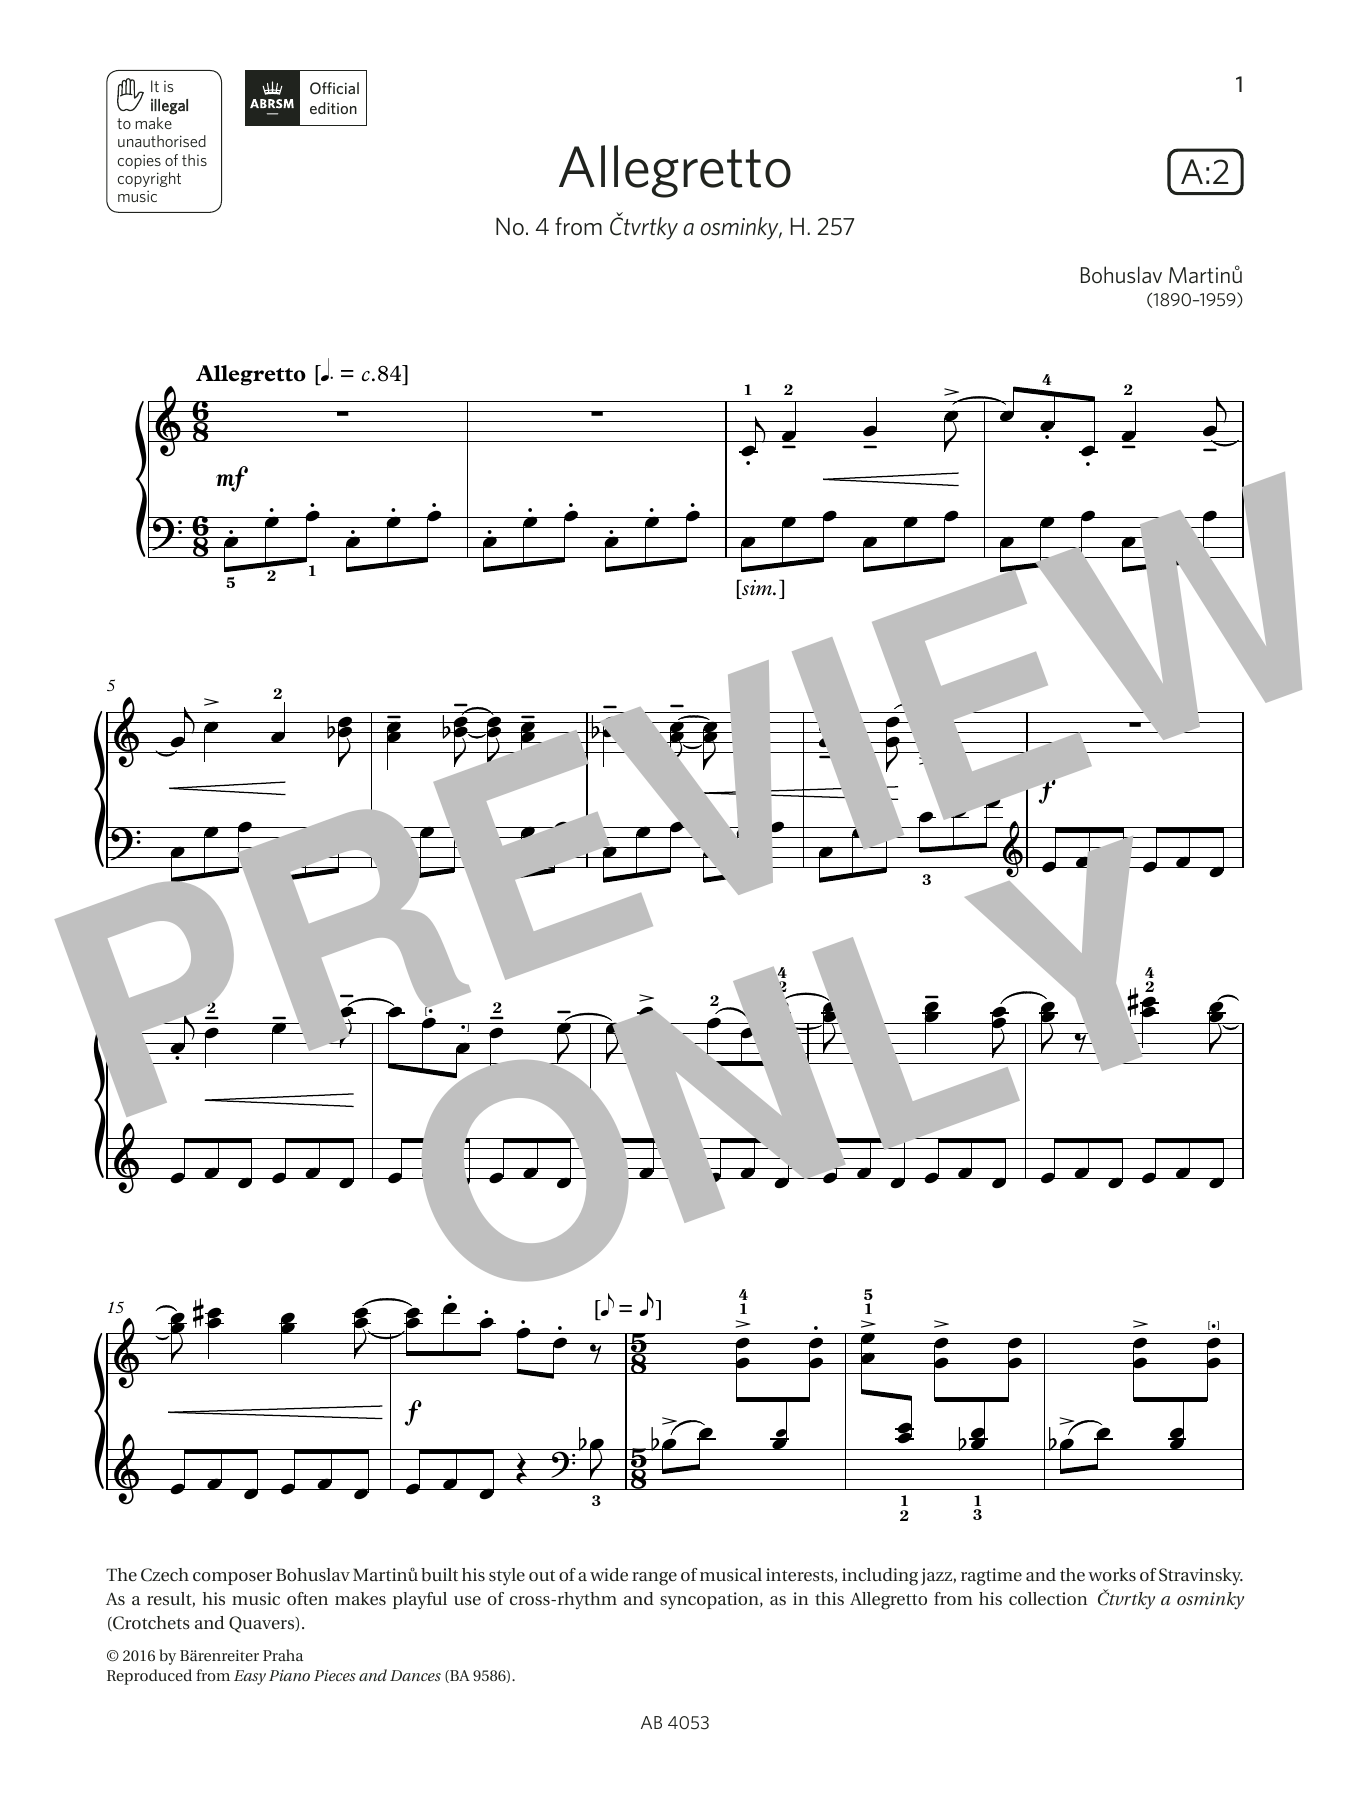 Download Bohuslav Martinu Allegretto (Grade 7, list A2, from the Sheet Music